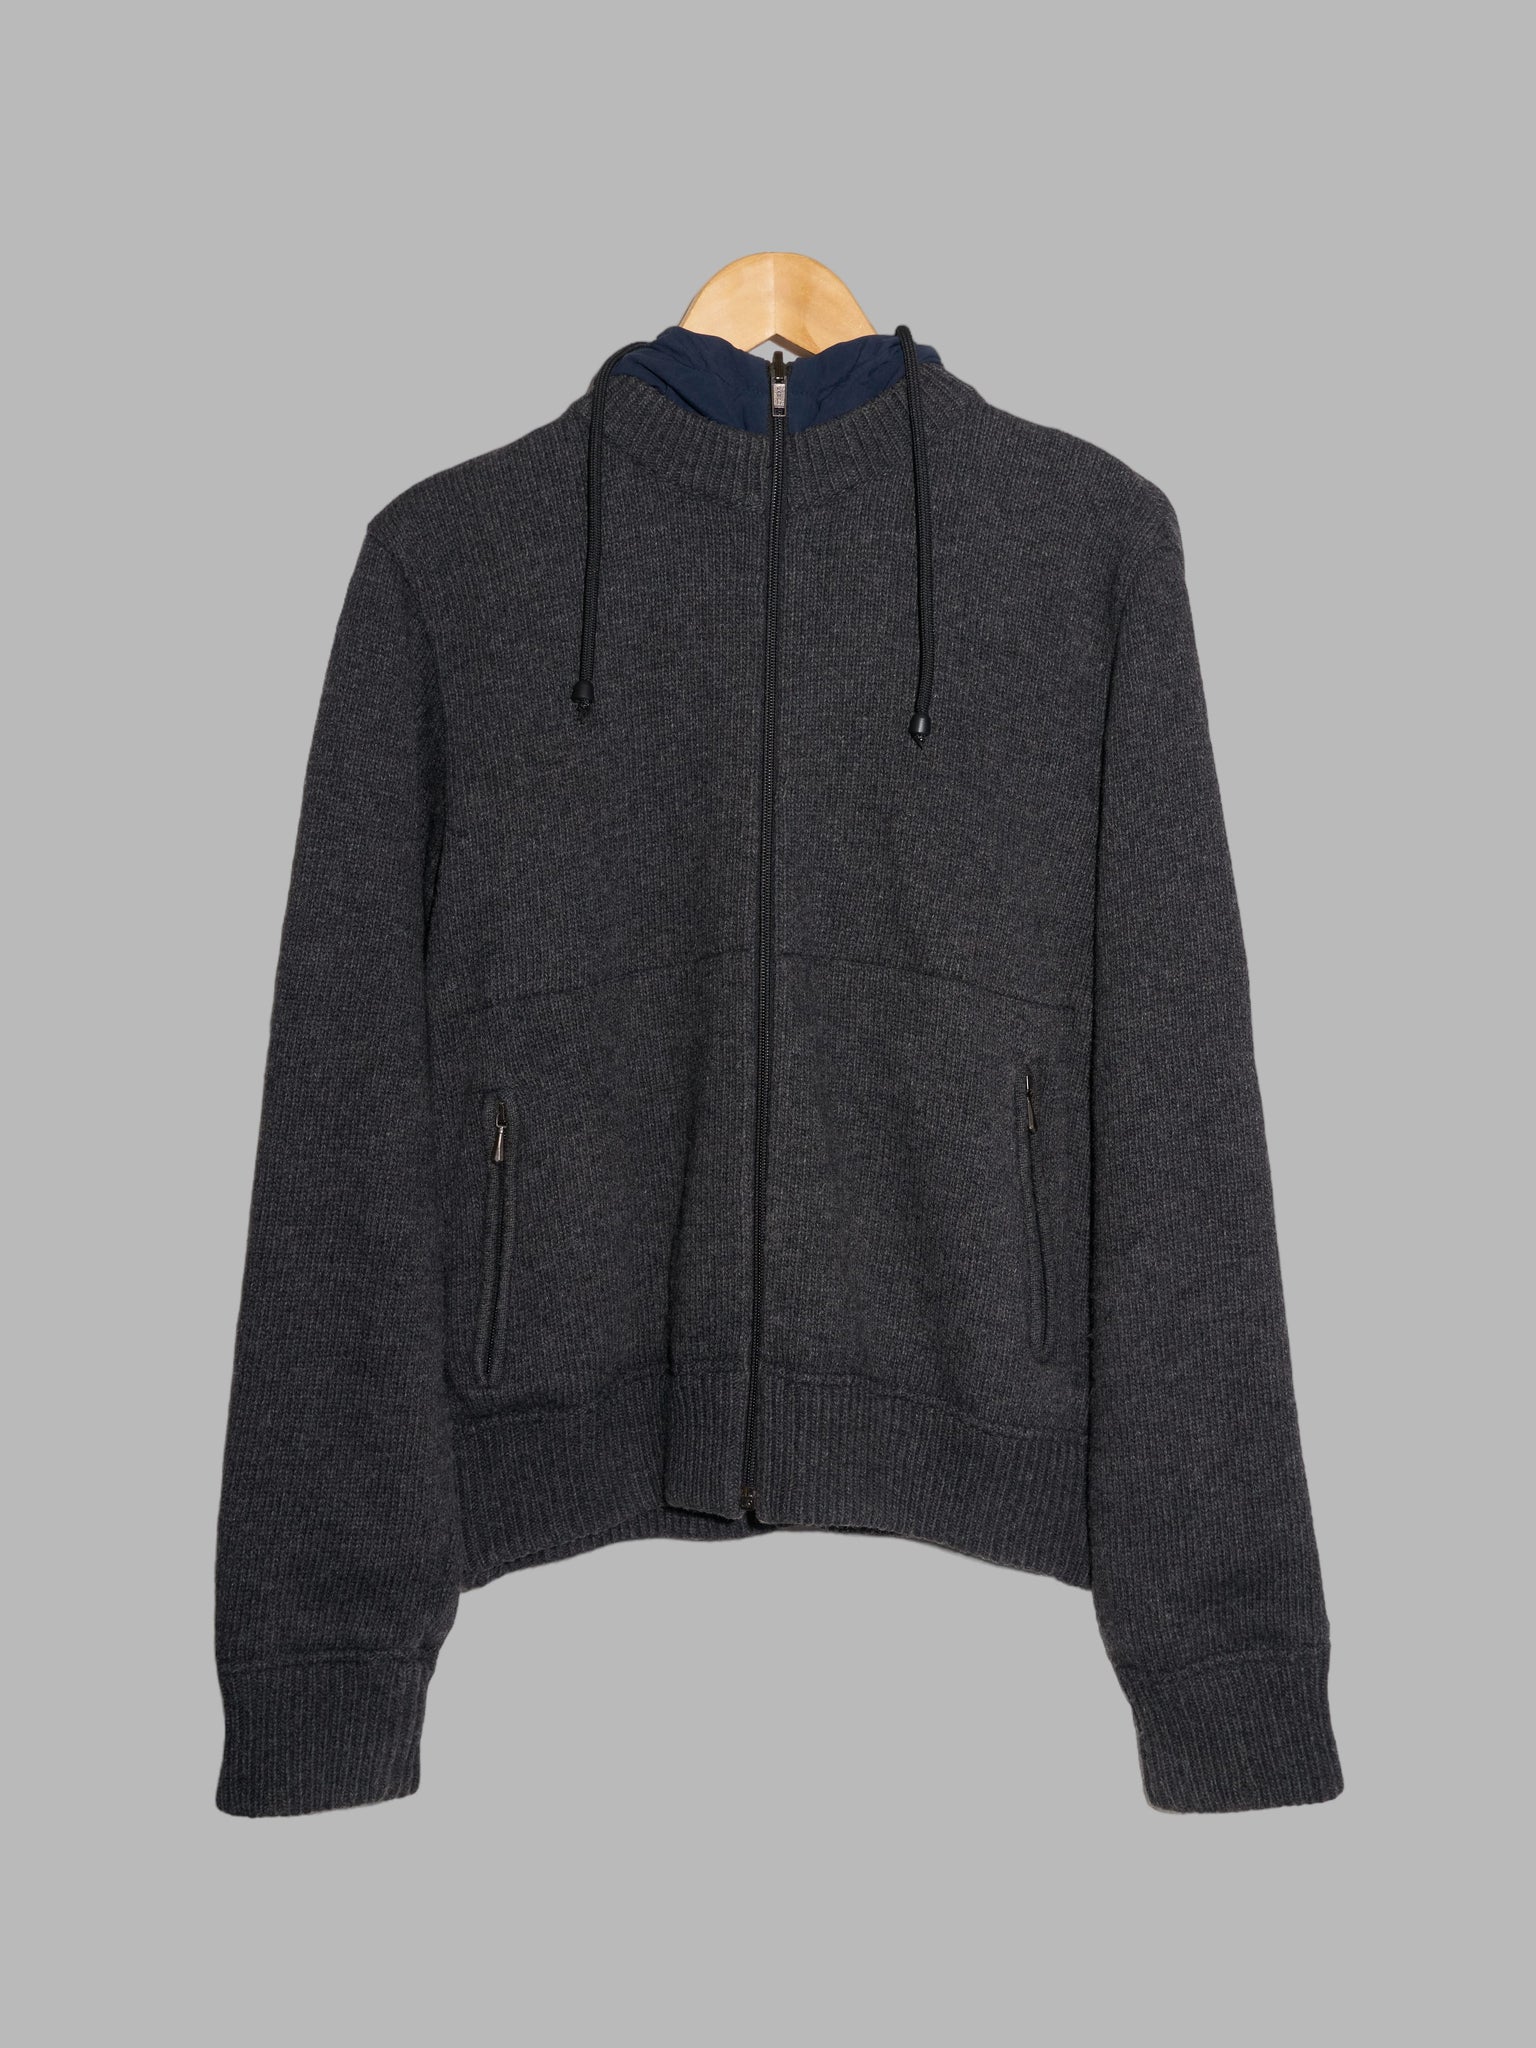 Dirk Bikkembergs 1990s 2000s grey wool layered knit hooded jacket - M